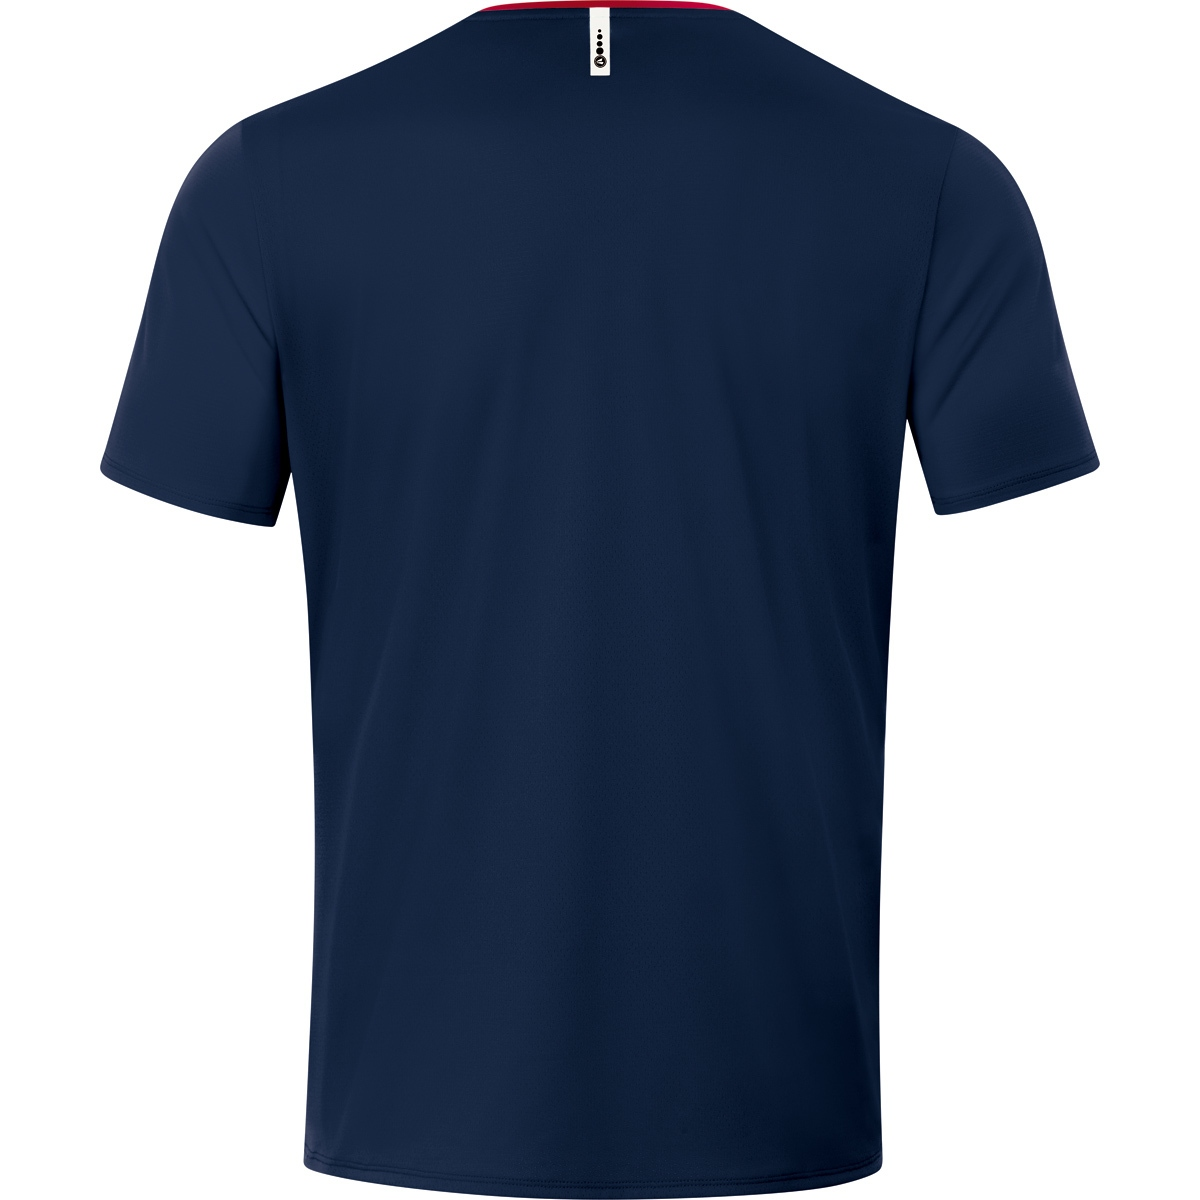 JAKO T-Shirt Champ rot, 2.0 Kinder, 6120 Gr. 140, marine/chili